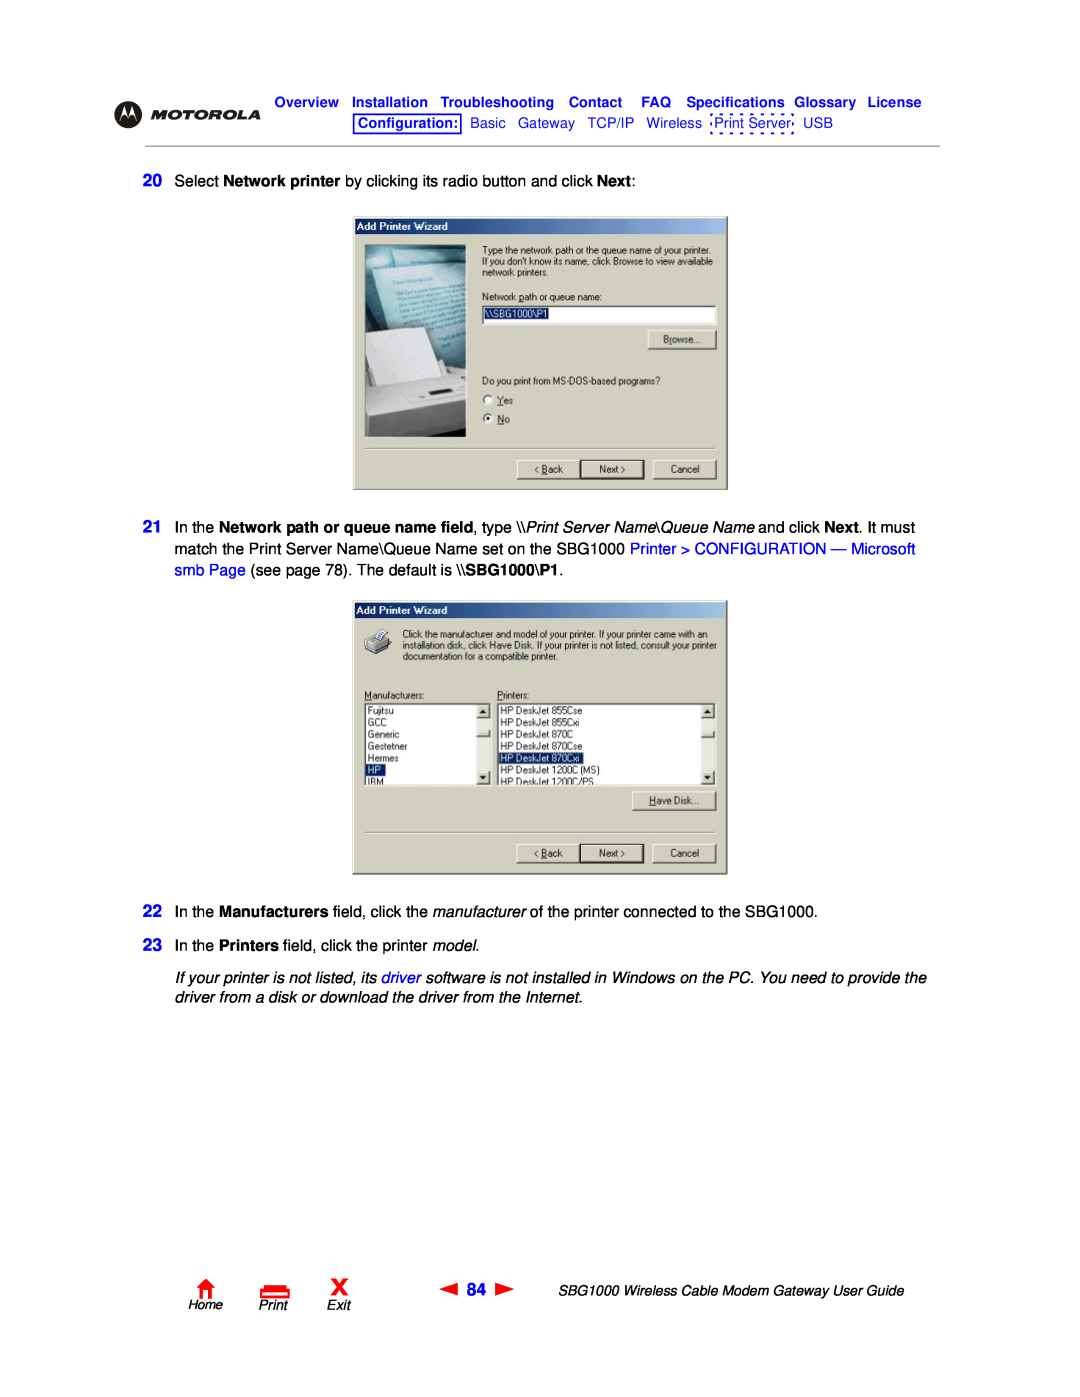 Motorola SBG1000 manual Select Network printer by clicking its radio button and click Next, Home Print Exit 